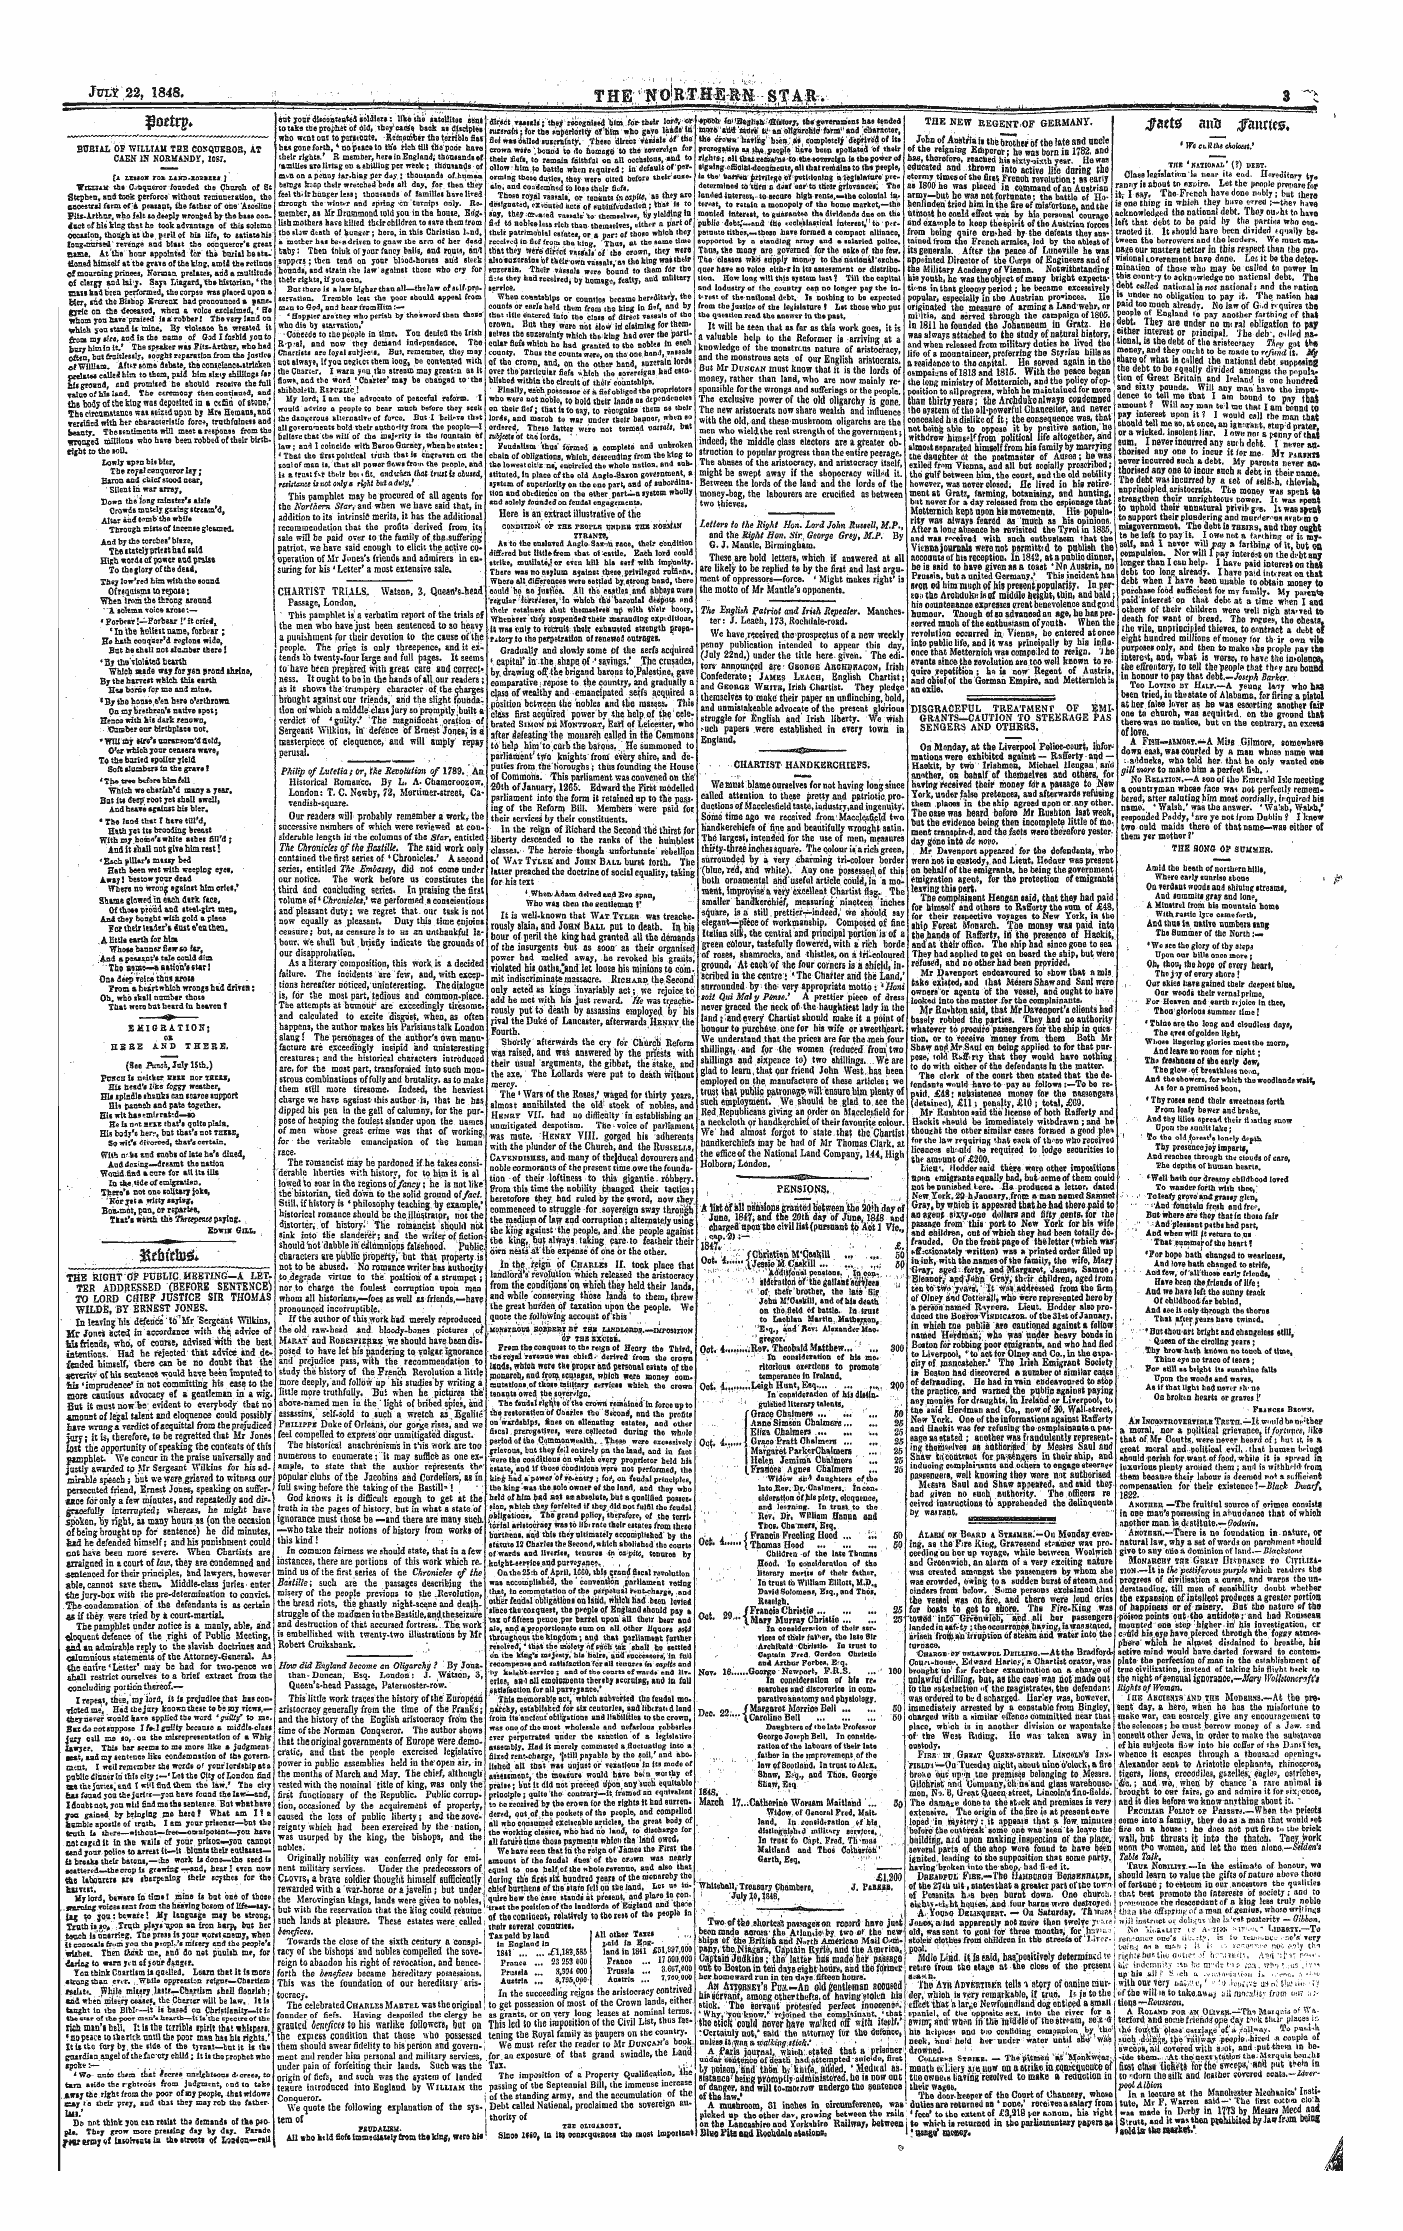 Northern Star (1837-1852): jS F Y, 1st edition - 4taet£ Ana Tfmtts*